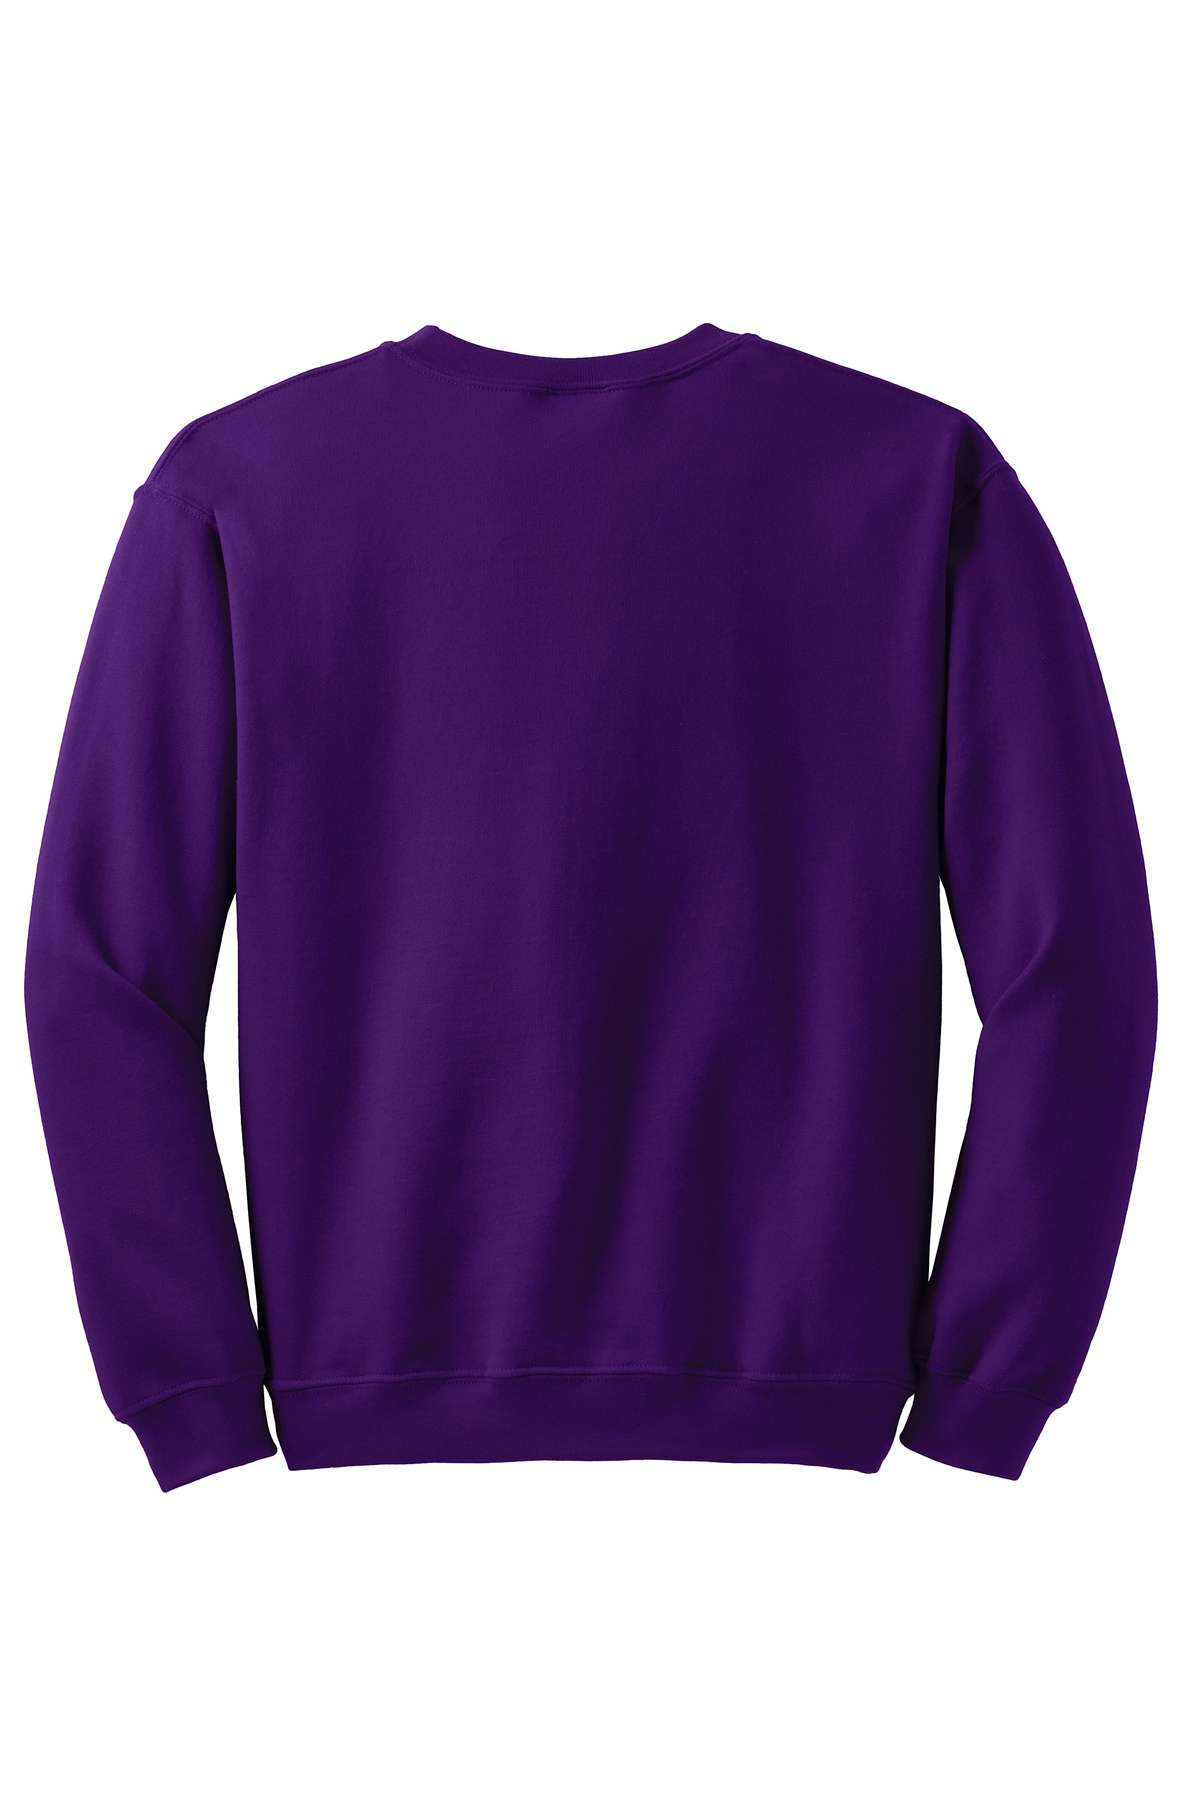 Gildan - Heavy Blend™ Crewneck Sweatshirt | Product | SanMar